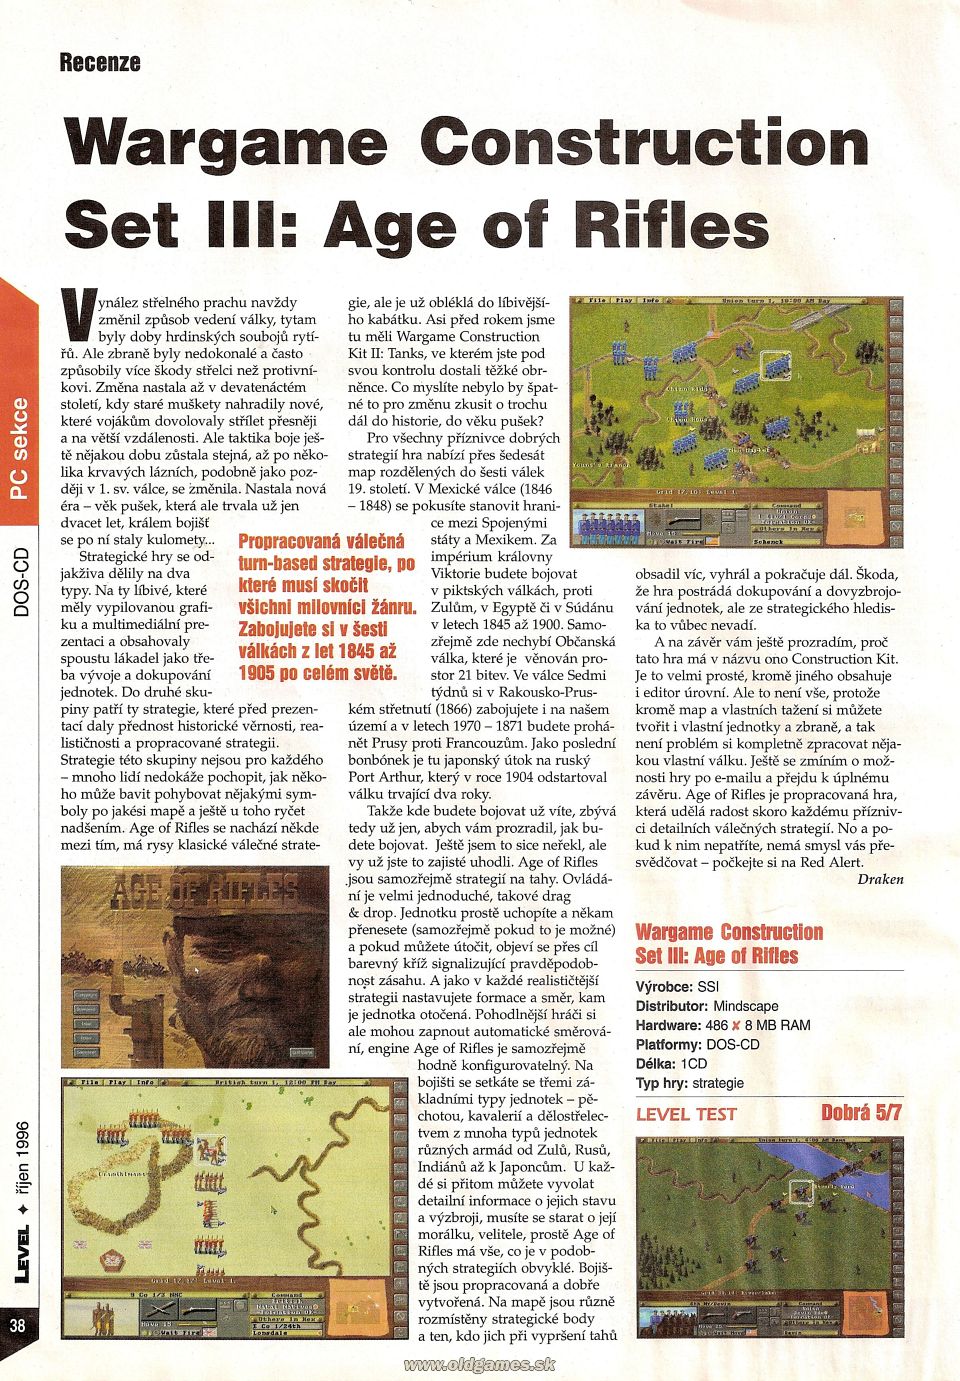 Wargame Contruction Set III: Age of Rifles